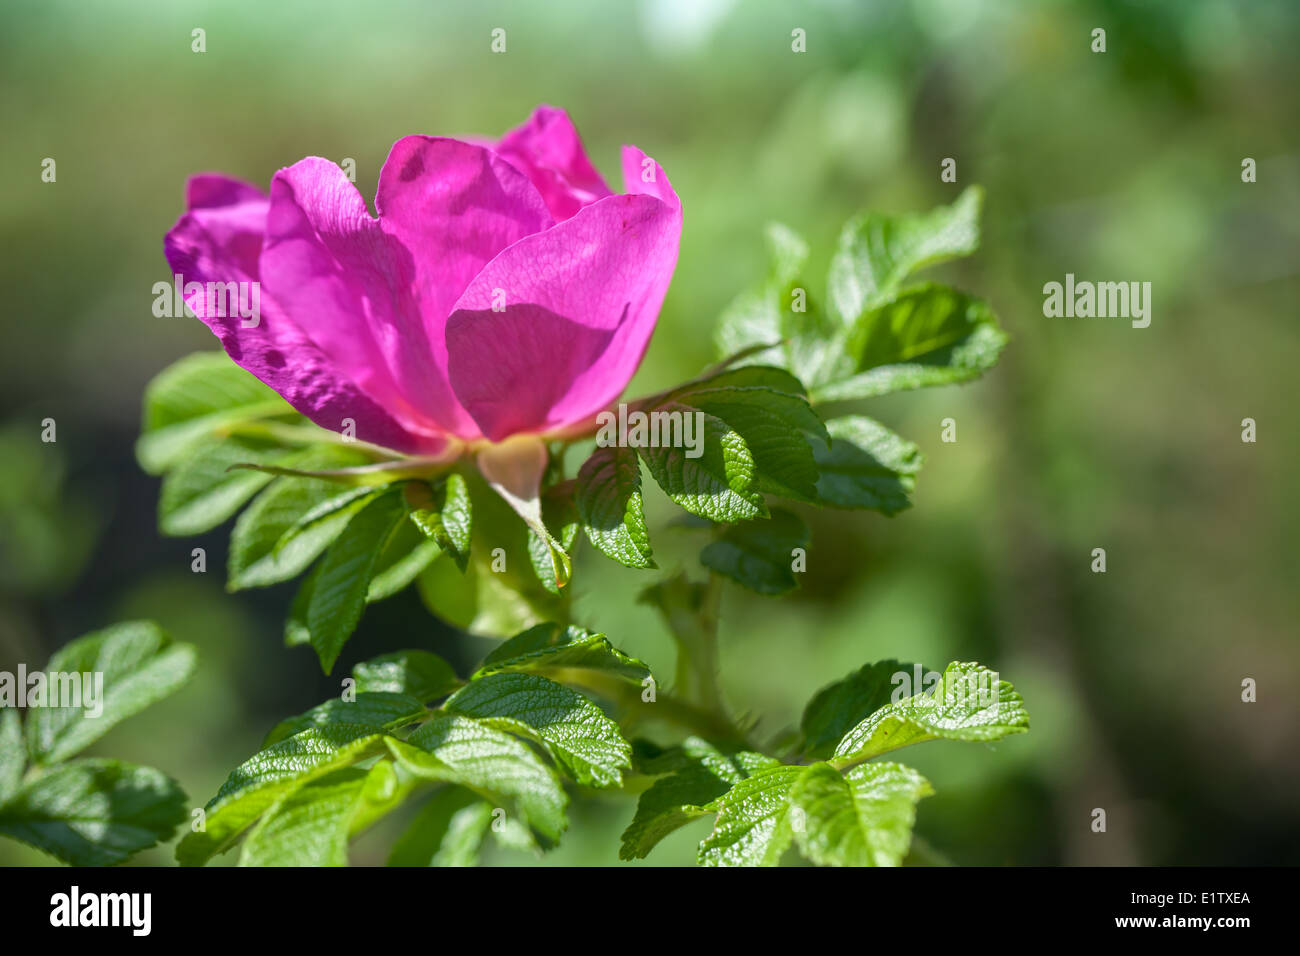 Pink wild dog-rose flower close up photo Stock Photo